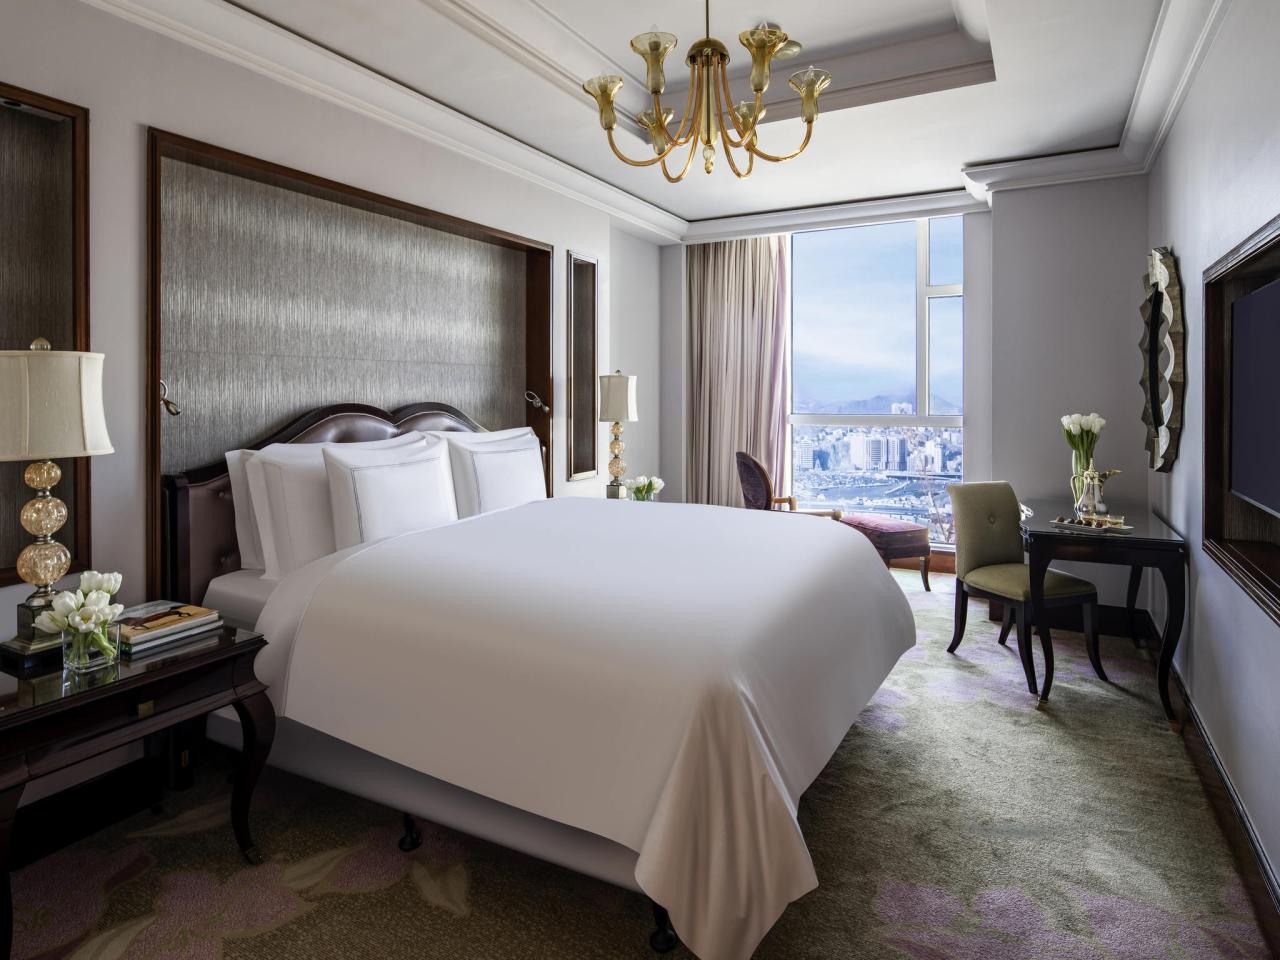 Makkah palace raffles hotel prestigious wins award back luxurylaunches choose board babita